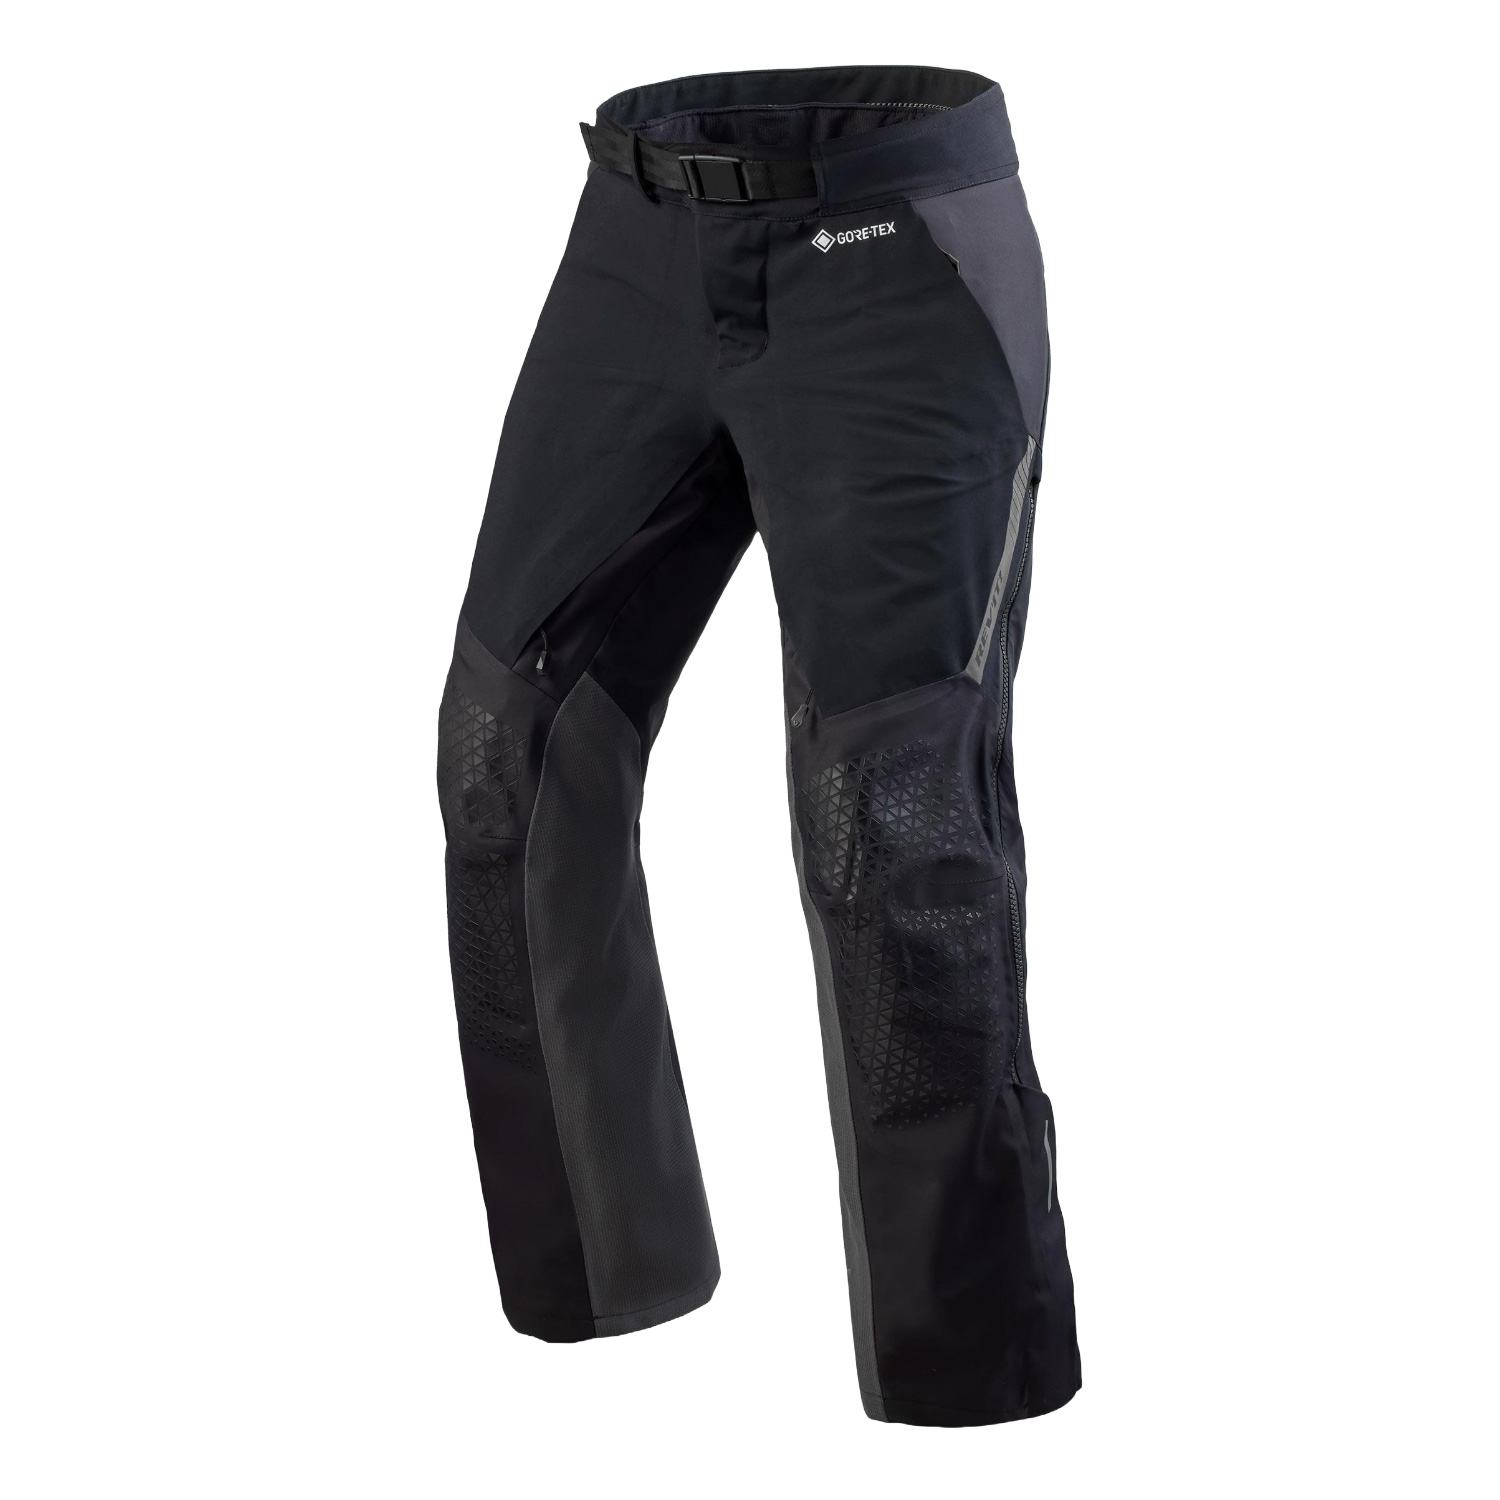 Image of REV'IT! Stratum GTX Black Grey Short Motorcycle Pants Size XL ID 8700001351225